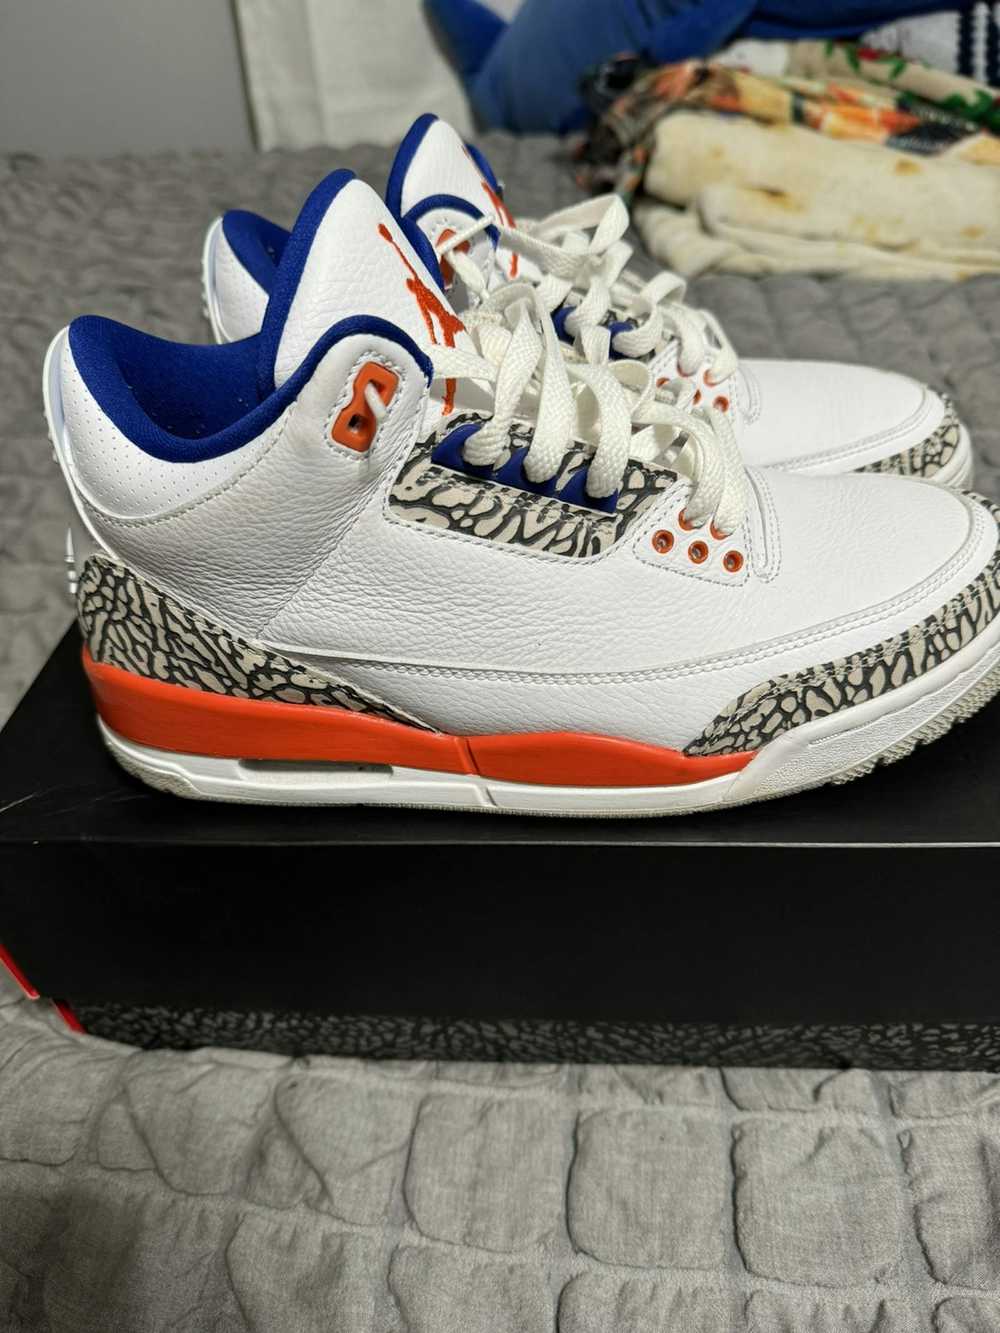 Jordan Brand Jordan 3 Retro Knicks - image 1